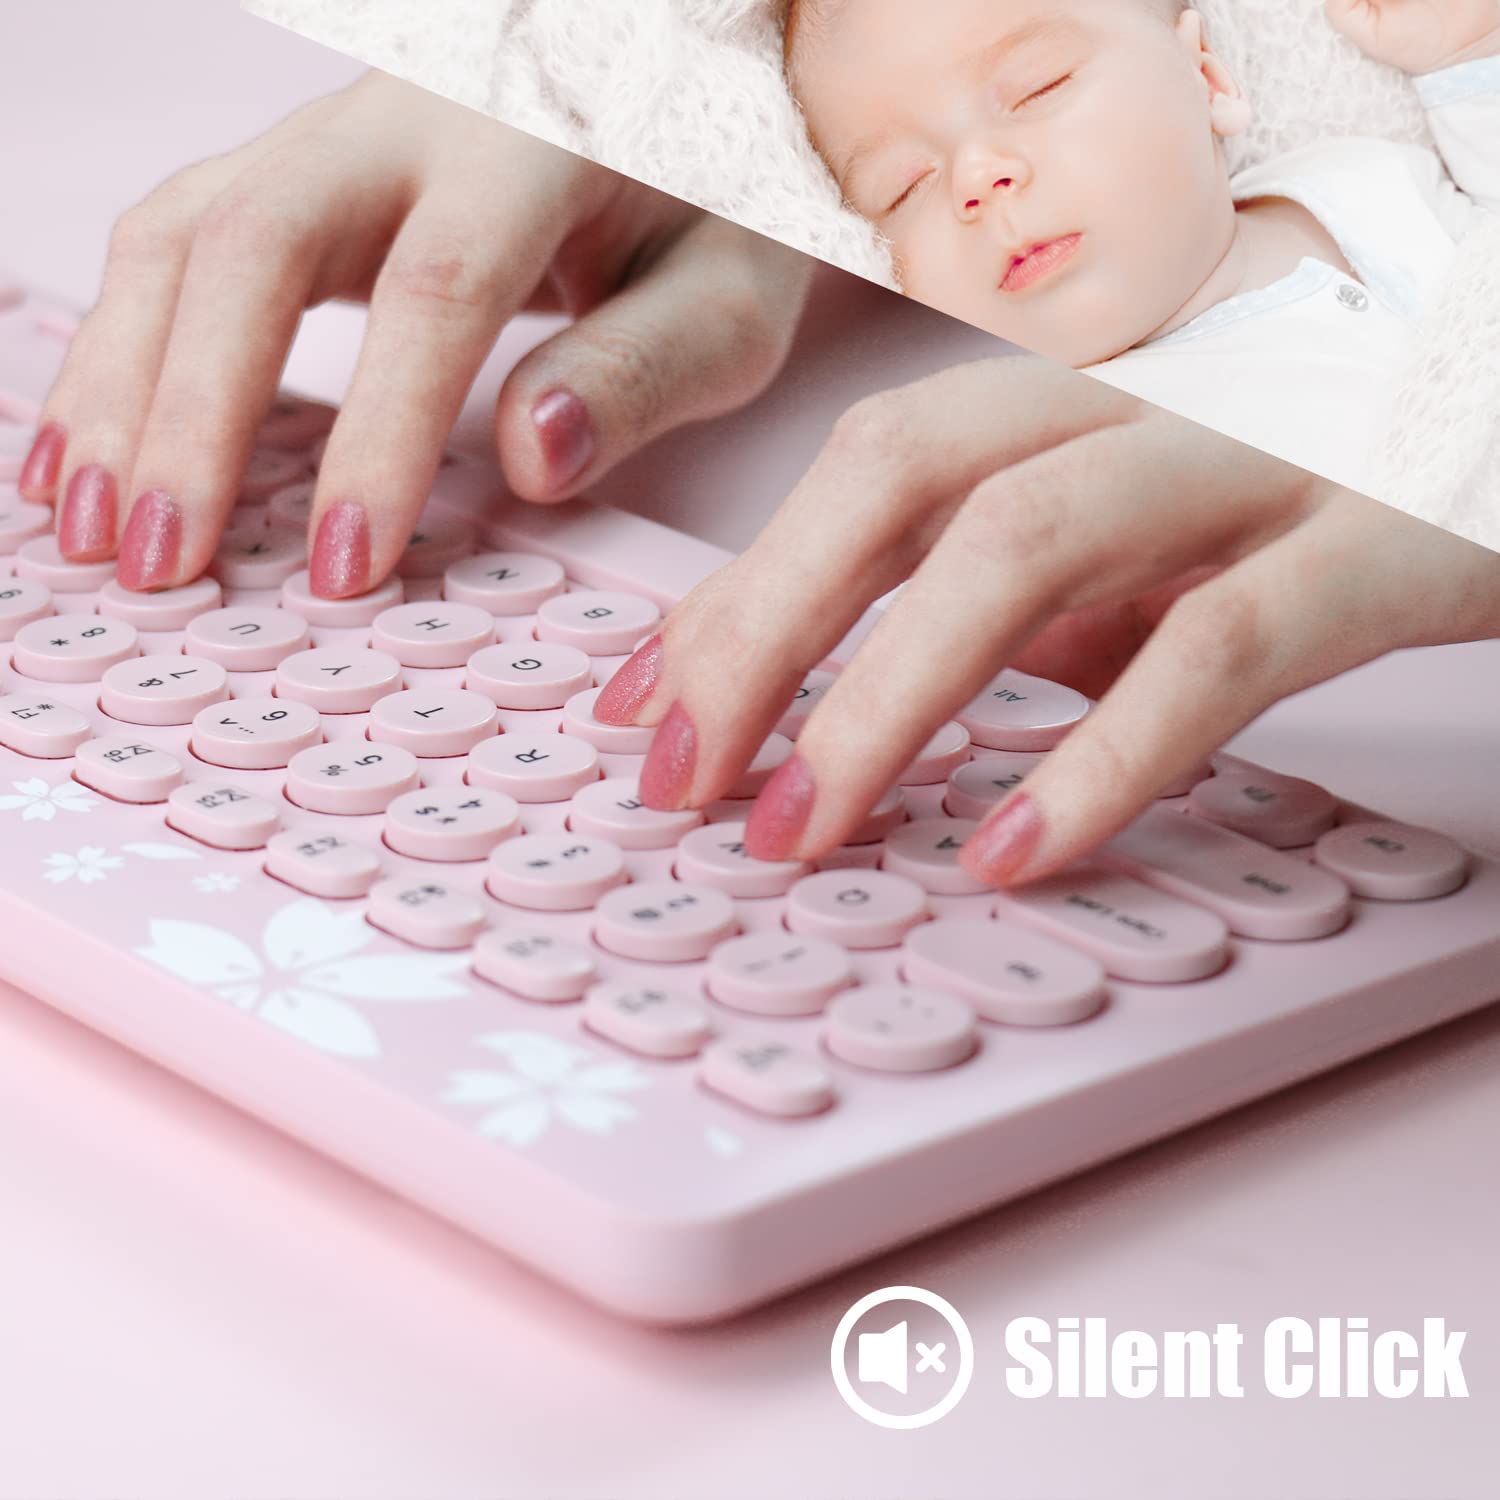 Mytrix Sakura Wireless Keyboard and Mouse Set, Cherry Pink Wireless Mouse and Keyboard Combo, Retro Type-Writer Keys, Silent 96-Key Keyboard